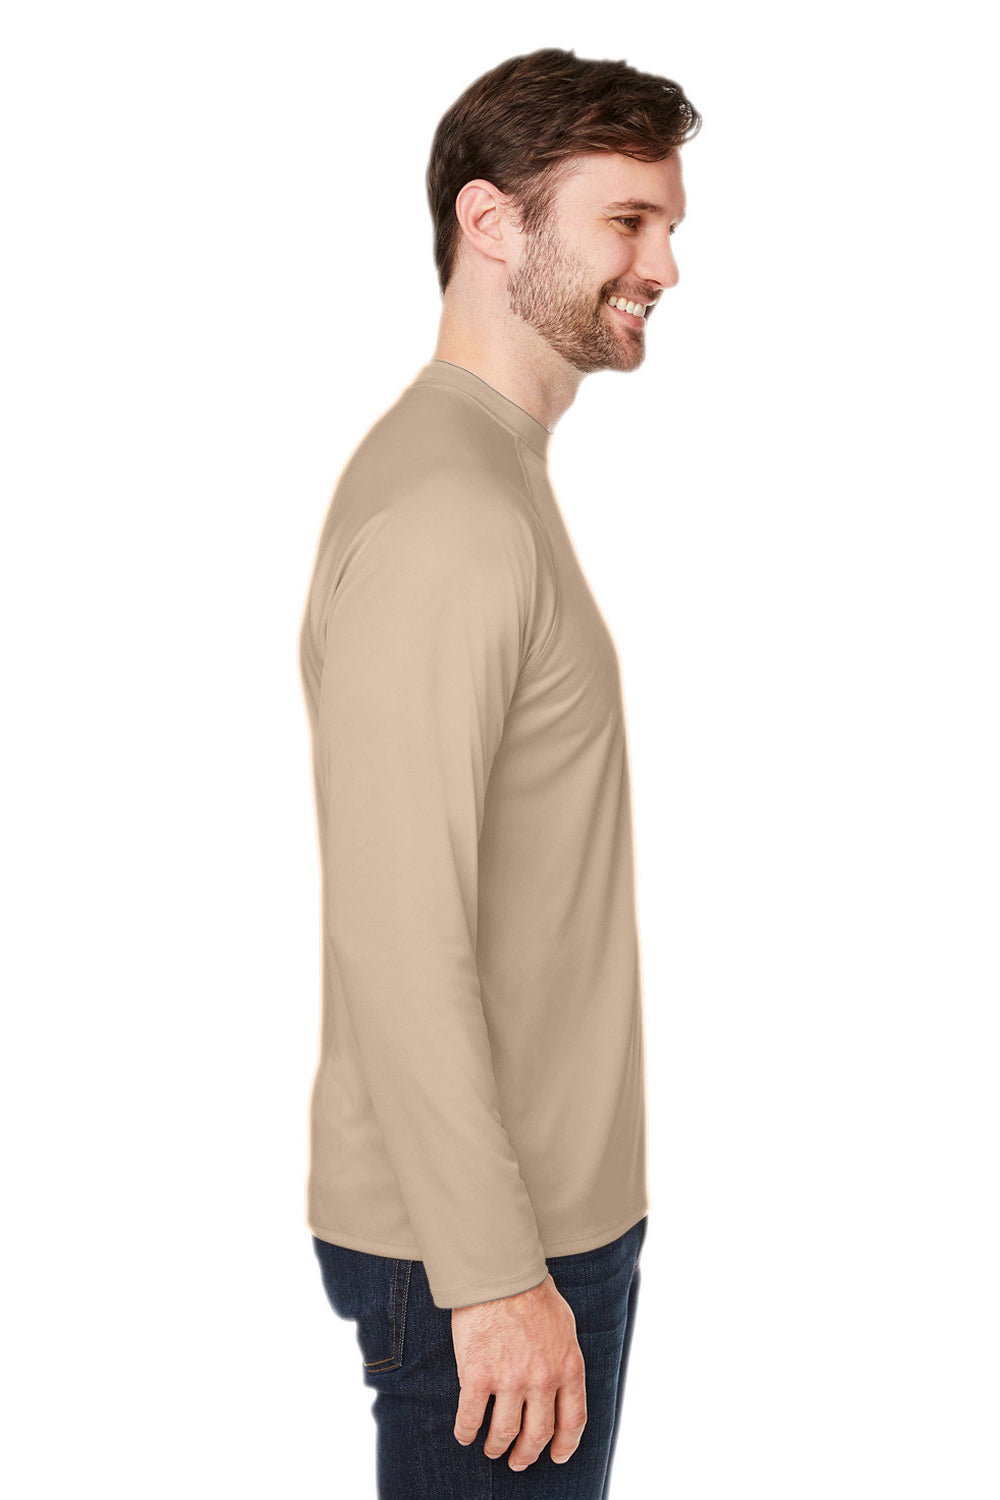 Core 365 CE110 Mens Ultra MVP Raglan Long Sleeve T-Shirt Stone Side